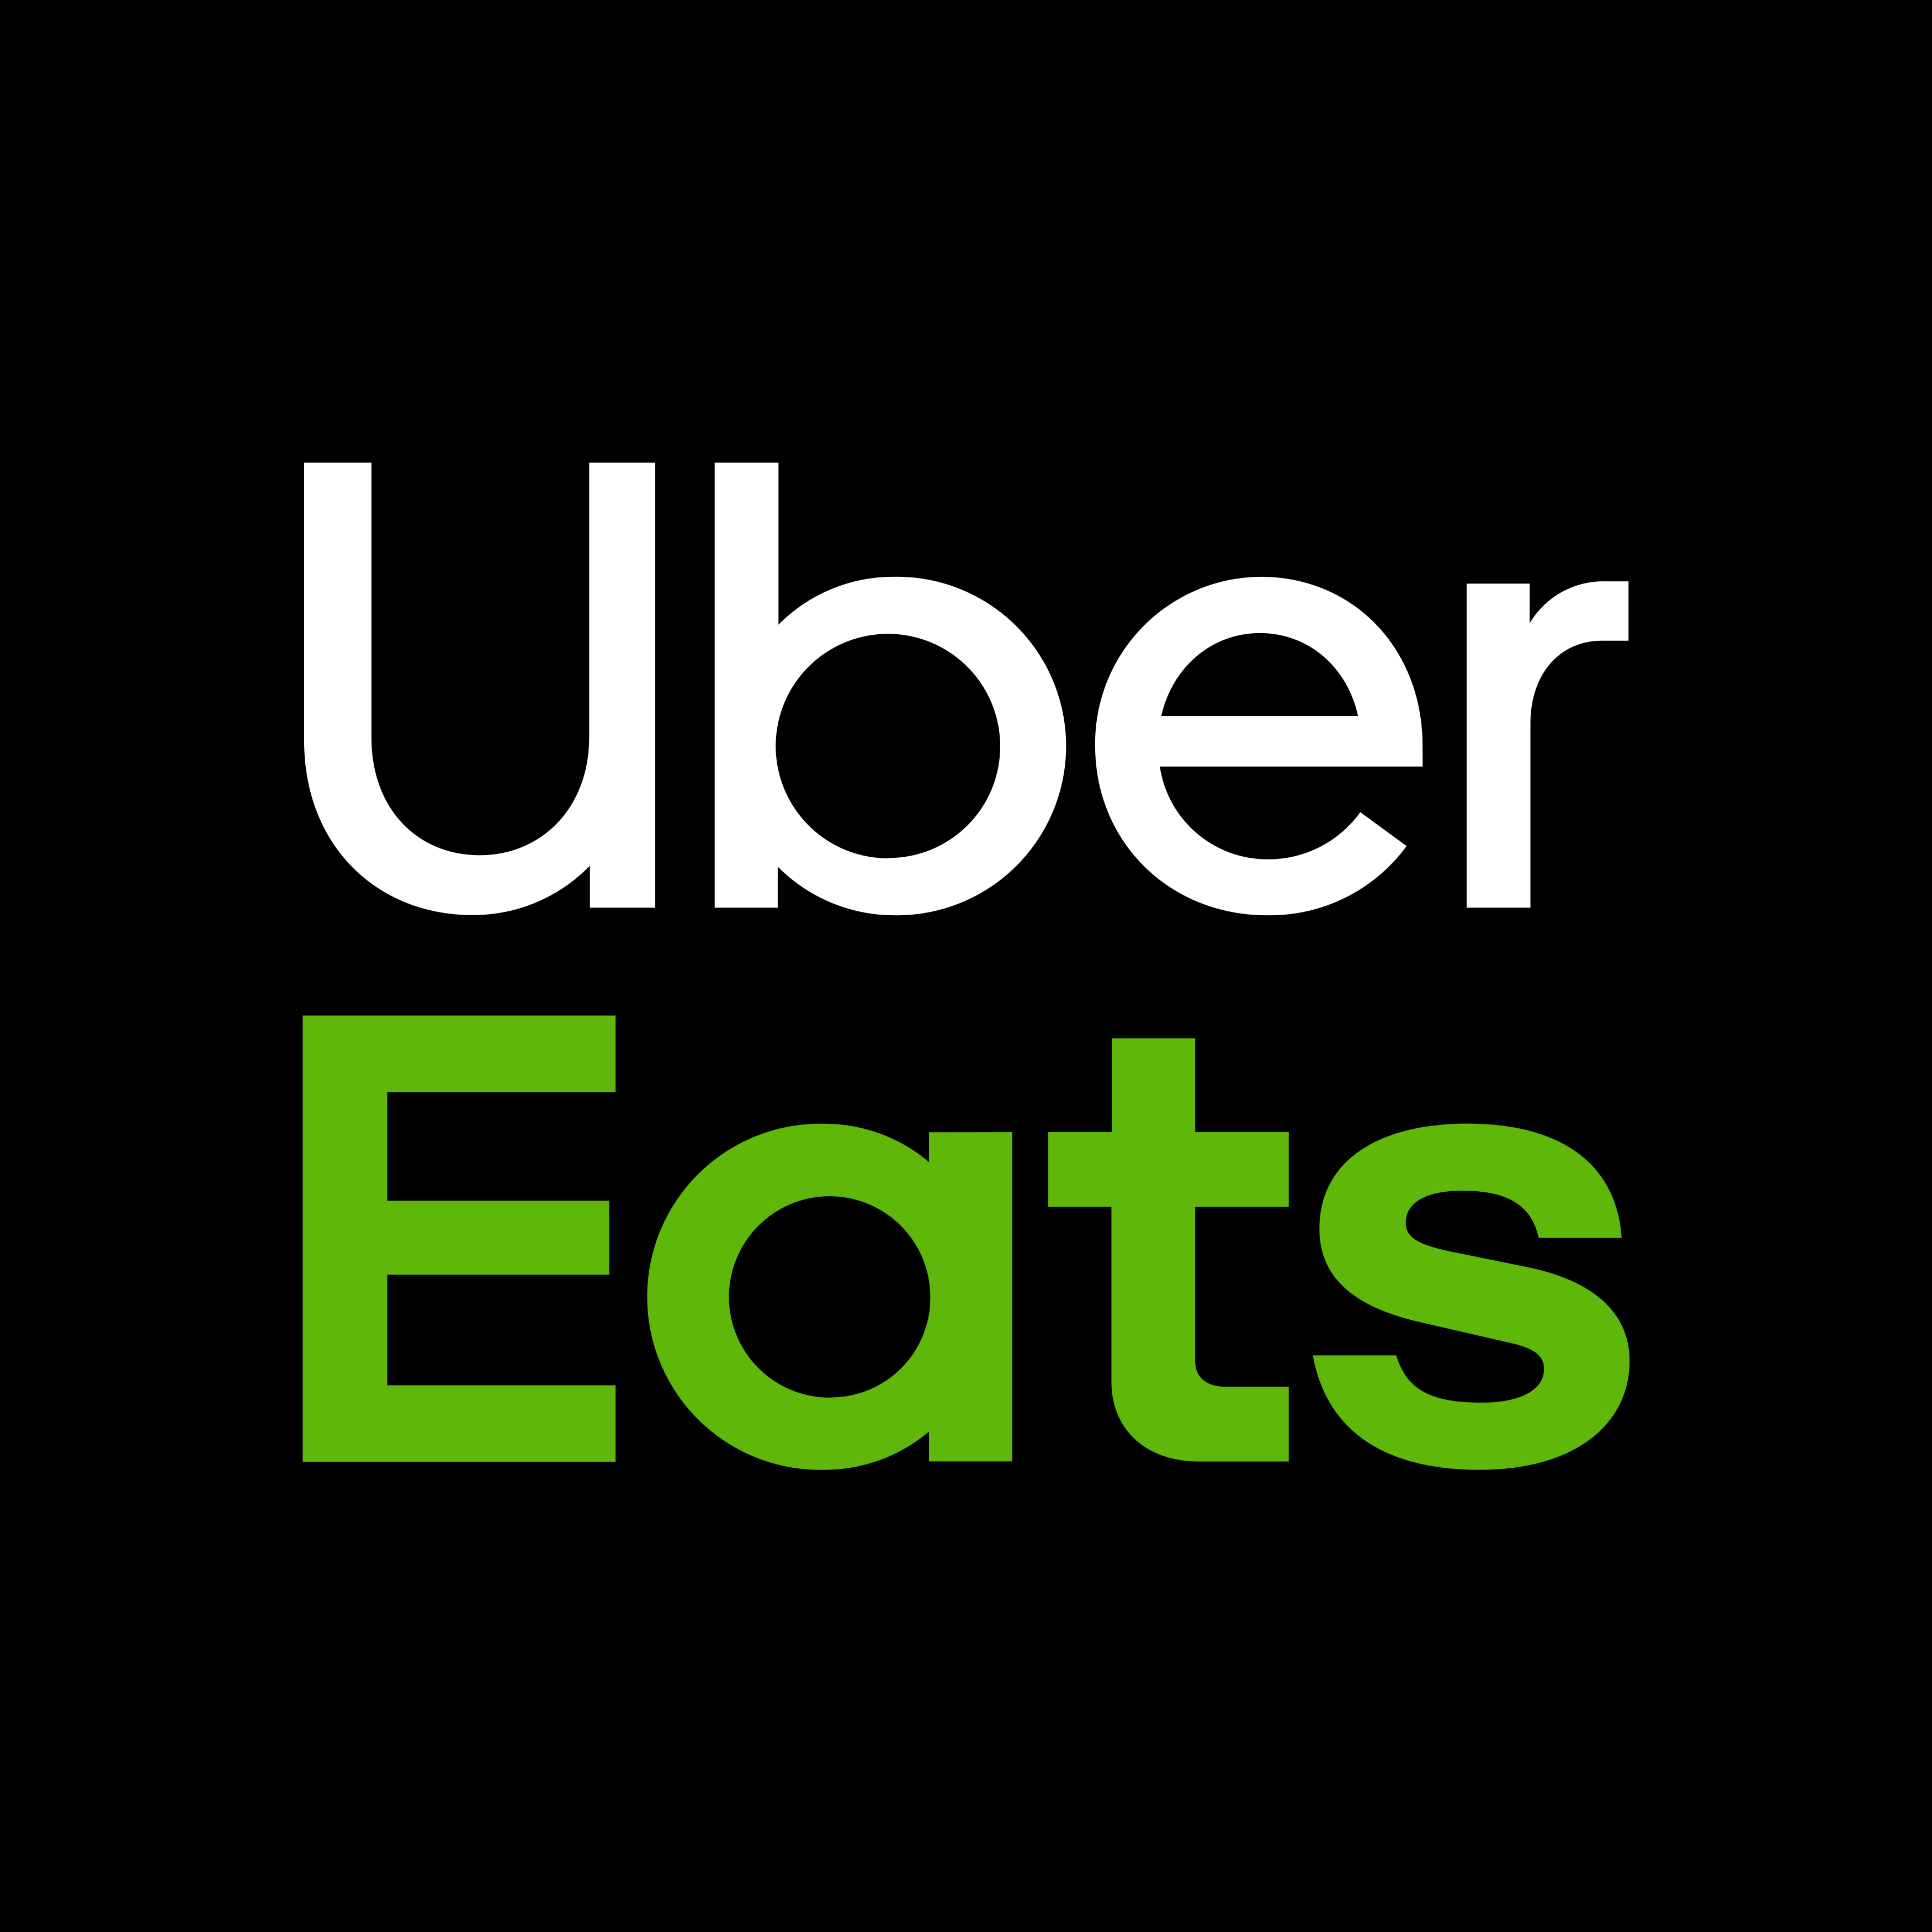 5310366-uber-eats-logo-png-and-vector-logo-download-uber-eats-png-3500_3500_preview